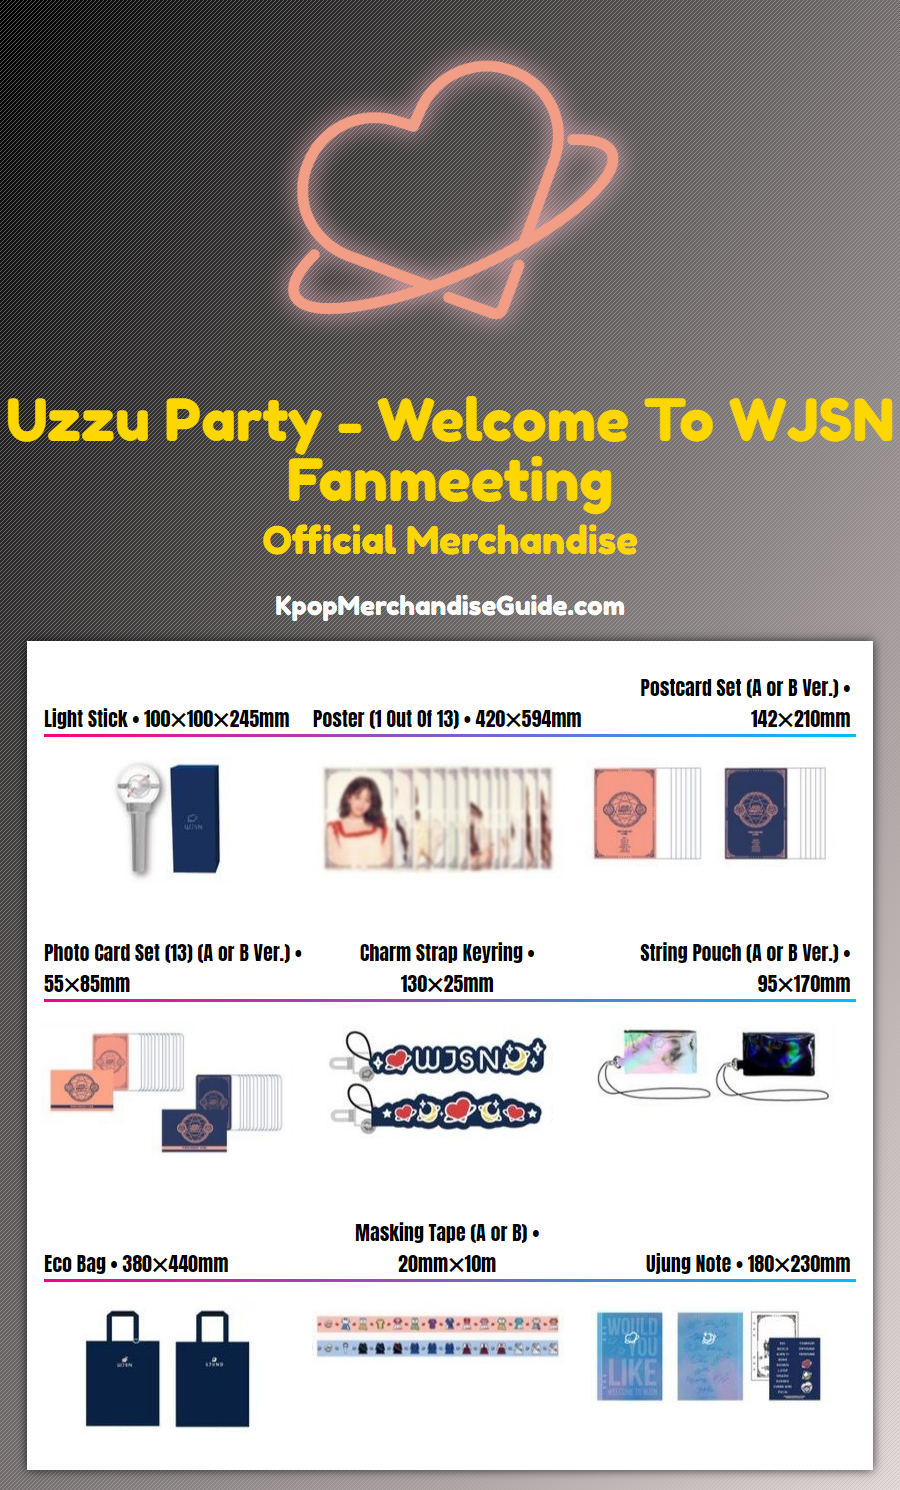 WJSN Uzzu Party - Welcome To WJSN Fanmeeting Merchandise